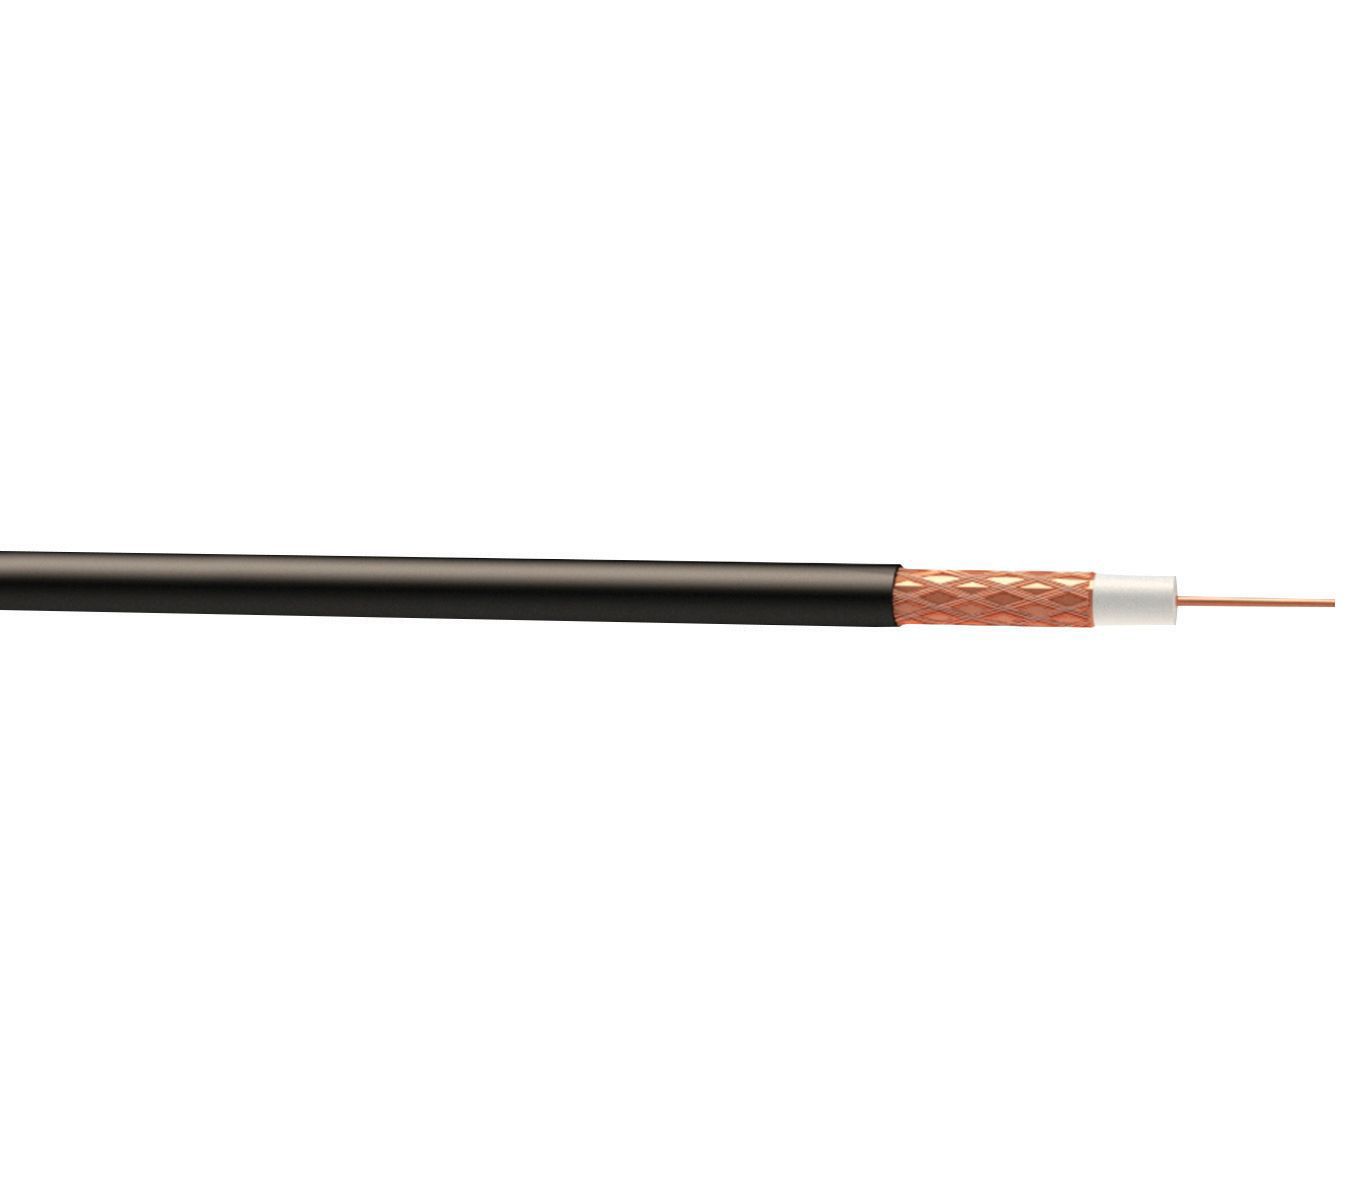 Nexans Black Coaxial cable, 25m